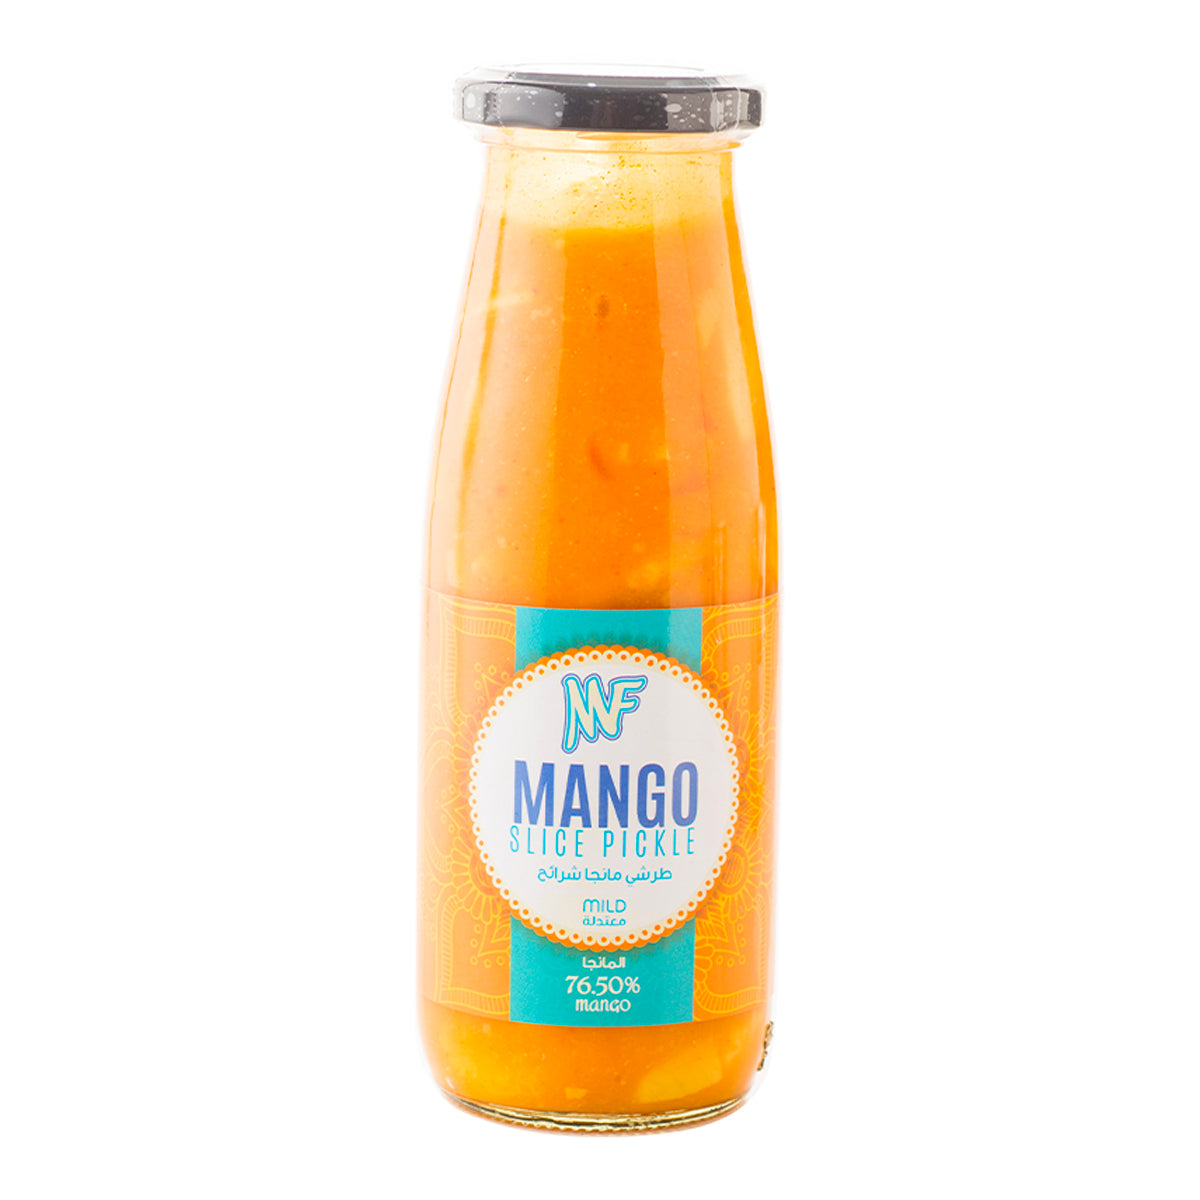 MF Mango Sliced Pickle 450g